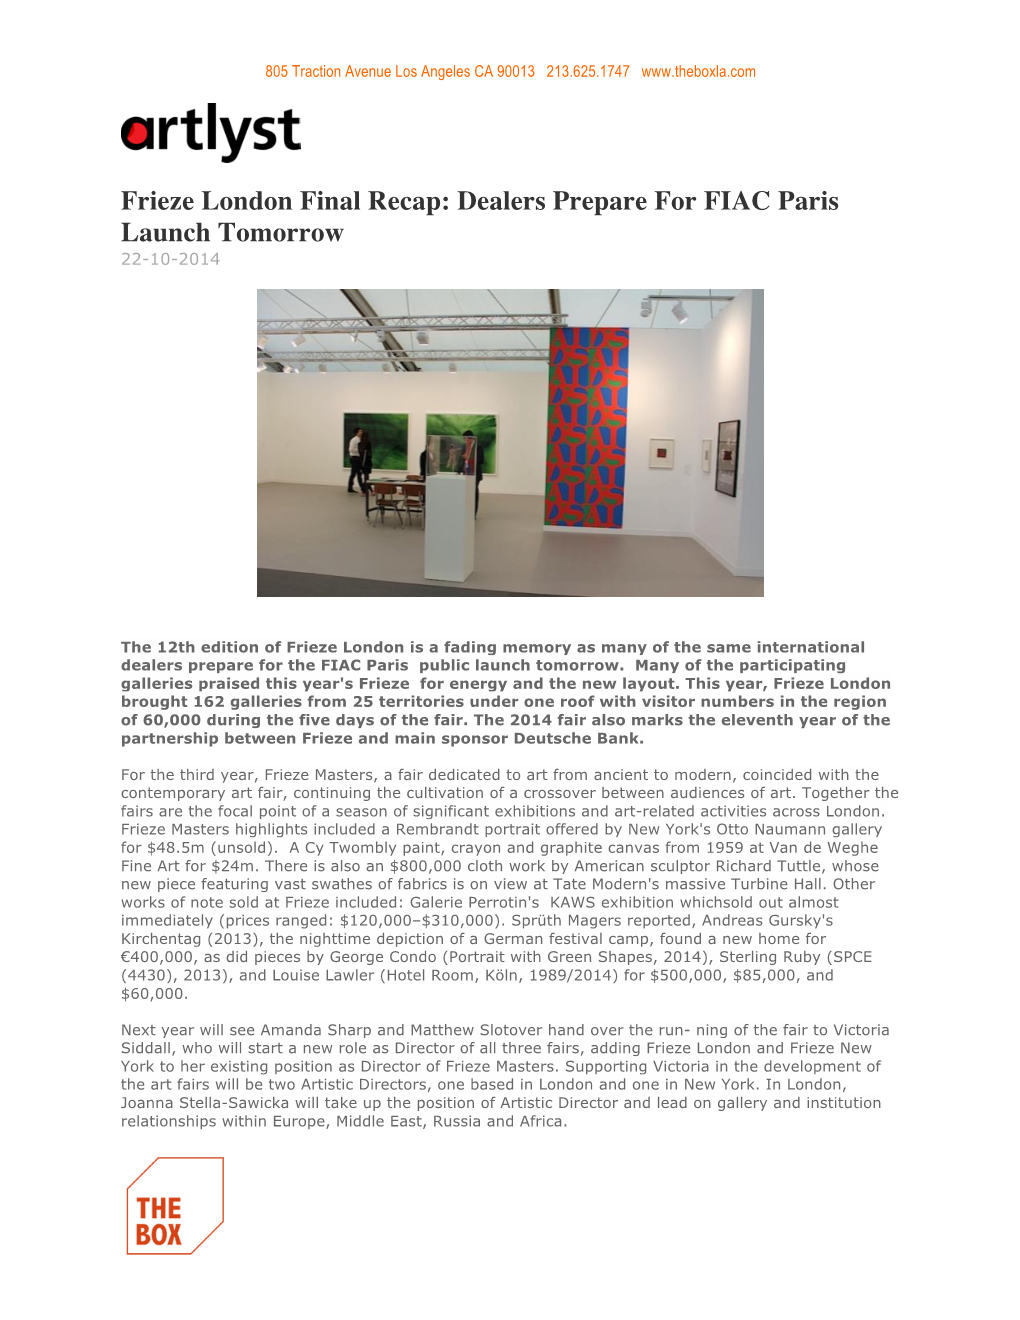 Frieze London Final Recap: Dealers Prepare for FIAC Paris Launch Tomorrow 22-10-2014